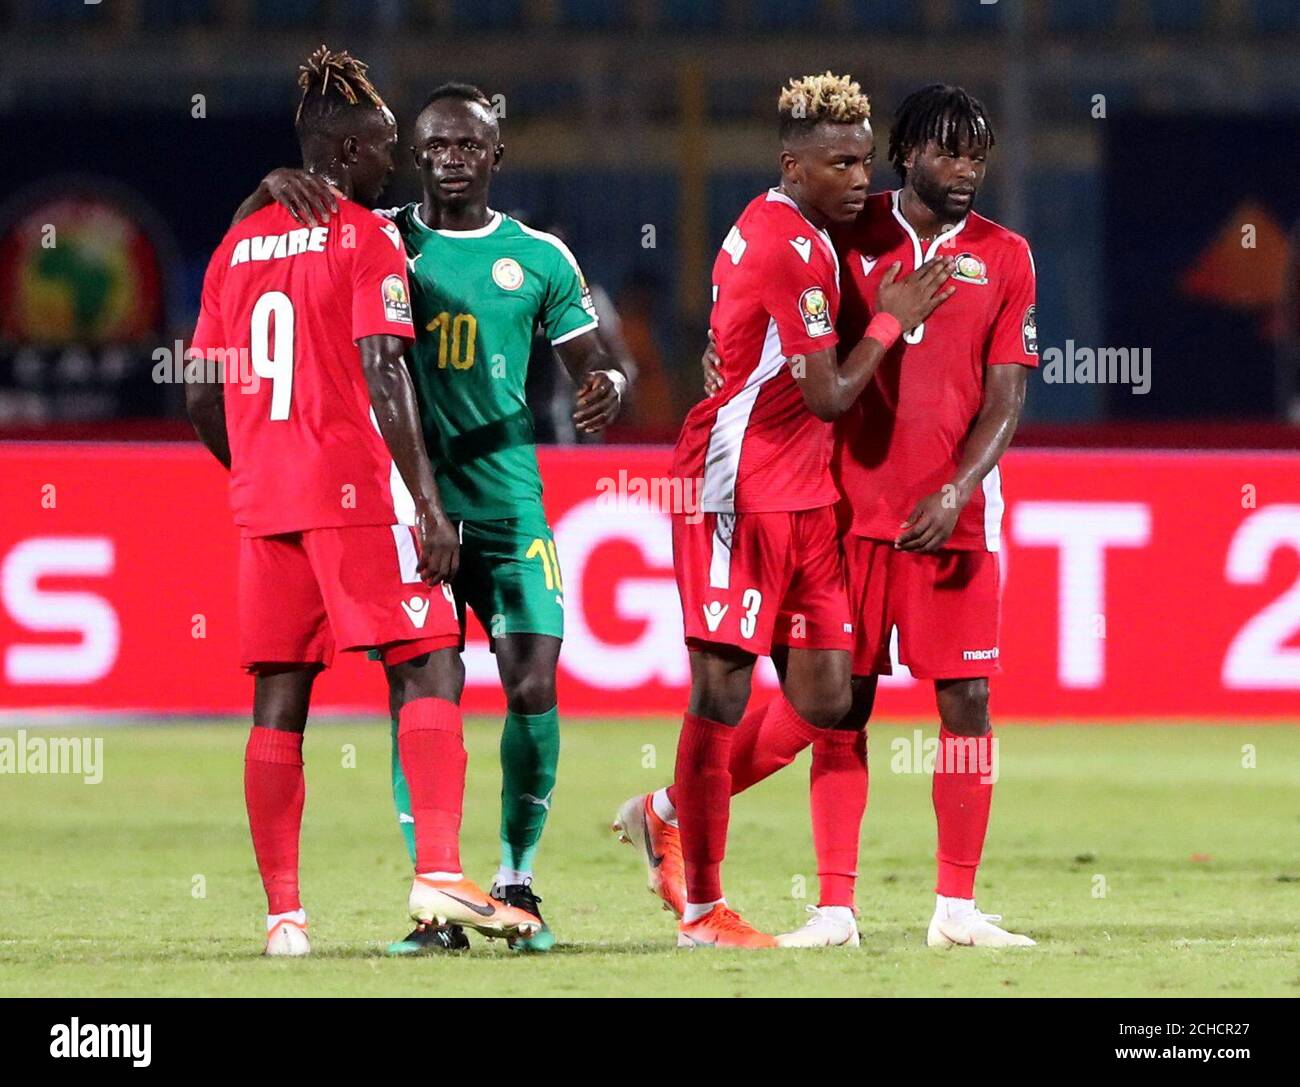 Calcio Calcio - Africa Cup of Nations 2019 - Gruppo C - Kenya v Senegal -  30 giugno Stadio, Cairo, Egitto - 1 luglio 2019 Sadio Mane del Senegal,  Johanna Omolo del